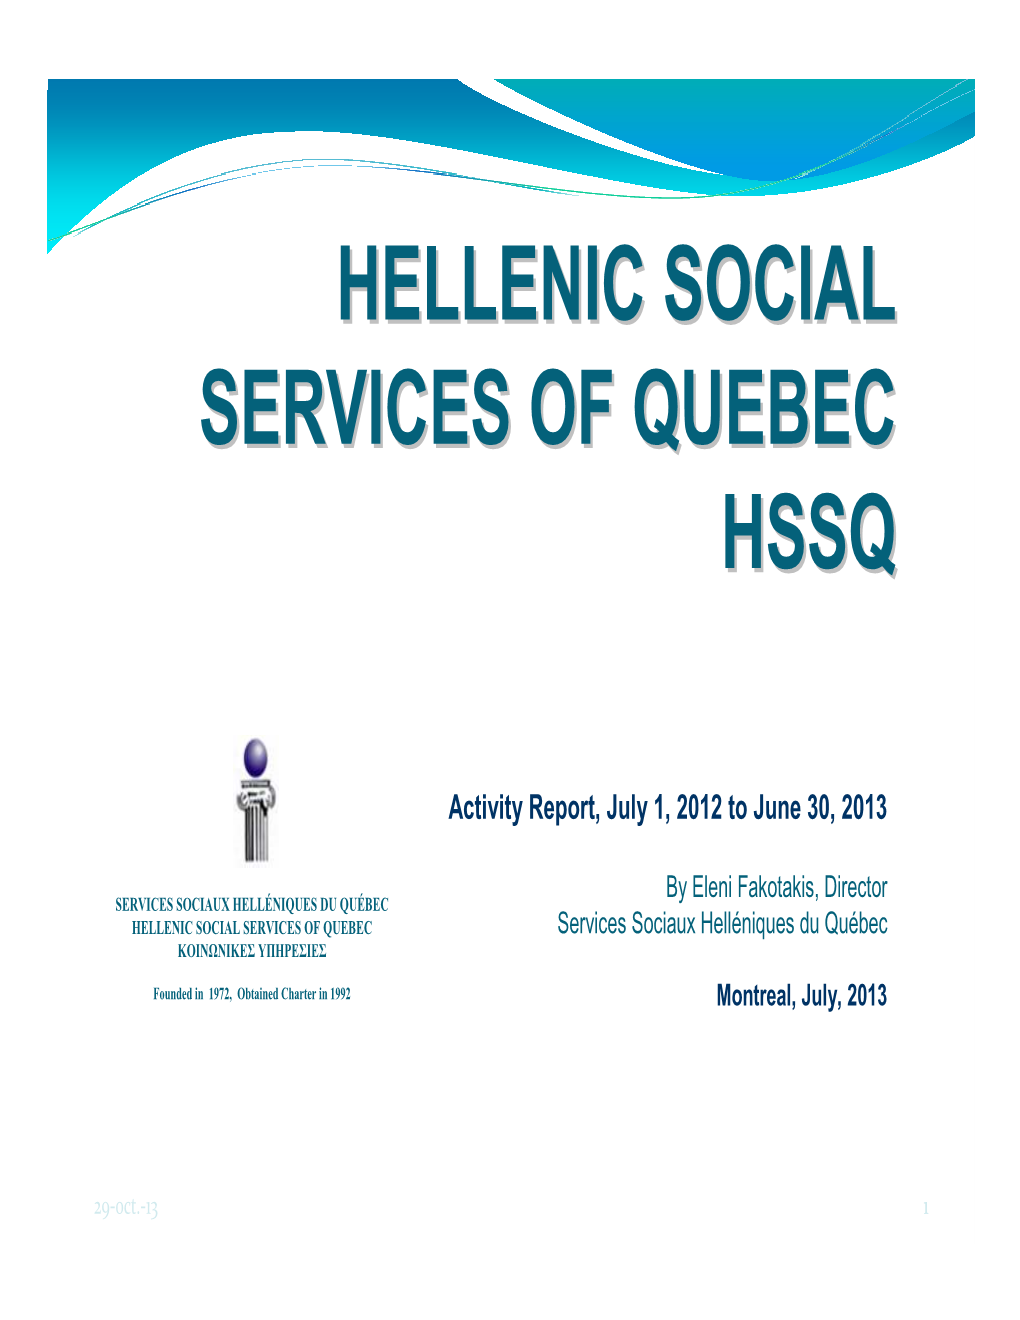 Hellenic Social Services of Quebec Hssq